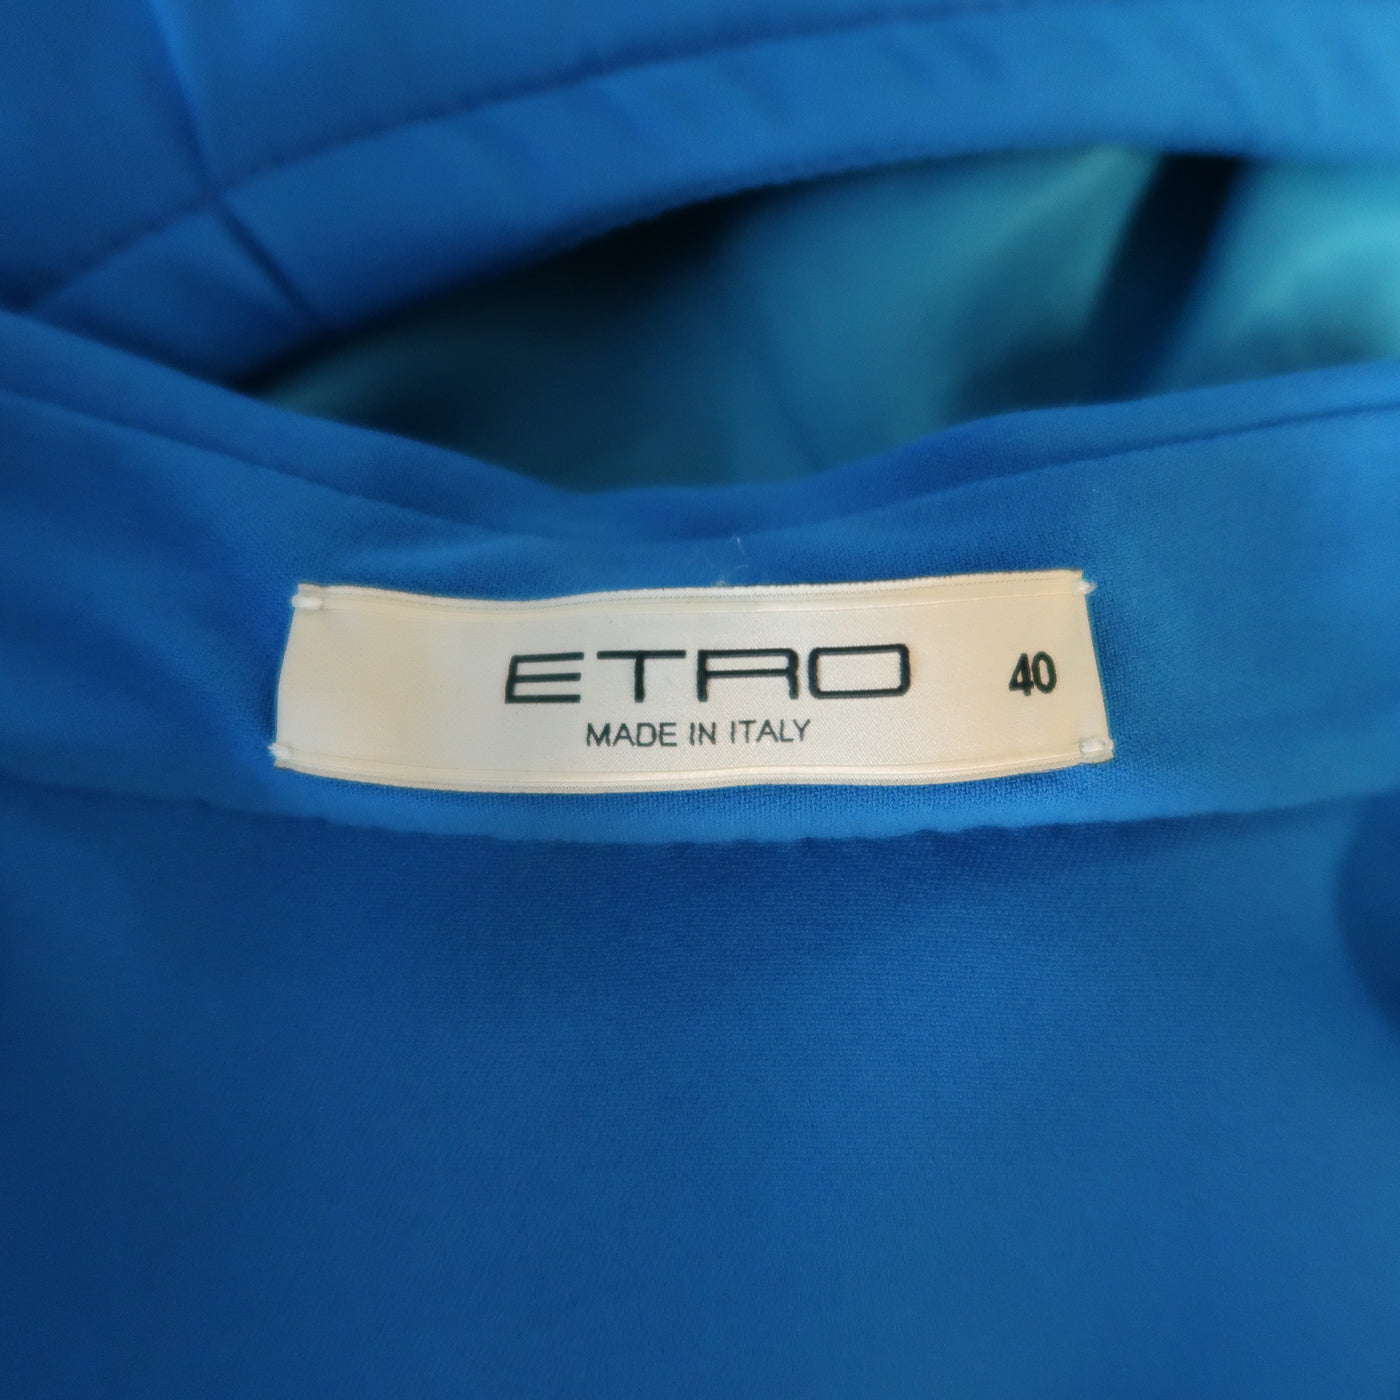 ETRO Size 4 Aqua Blue SLeeveless Half Button Sash Belt Dress